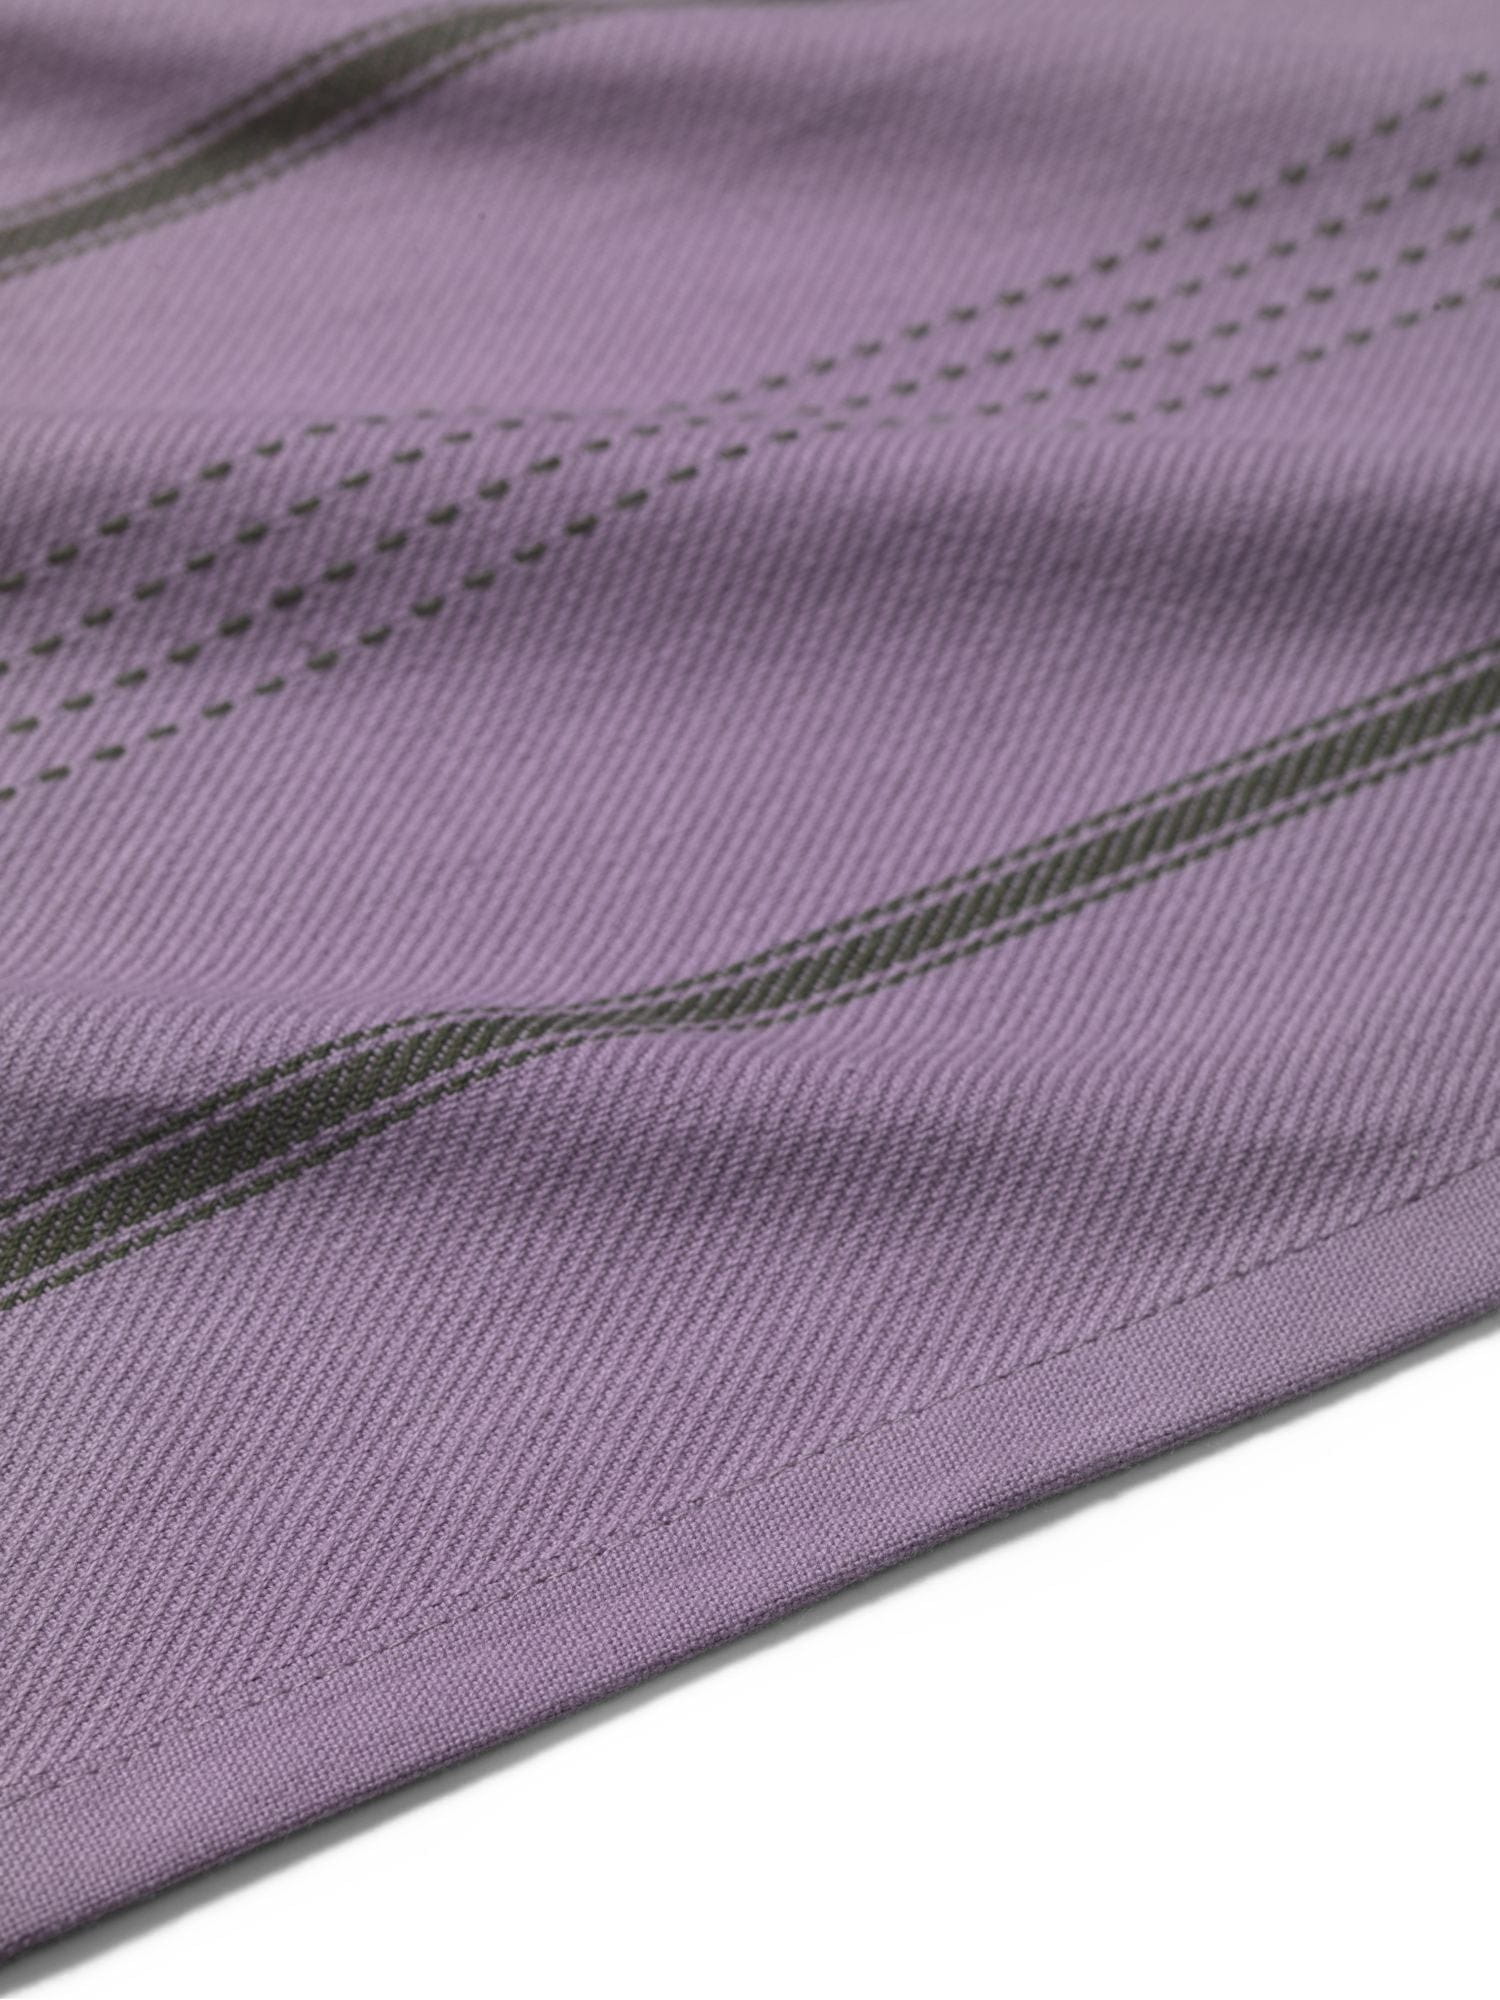 Rosendahl Rosendahl Textiles Beta Tea Towel 50x70 Cm, Purple